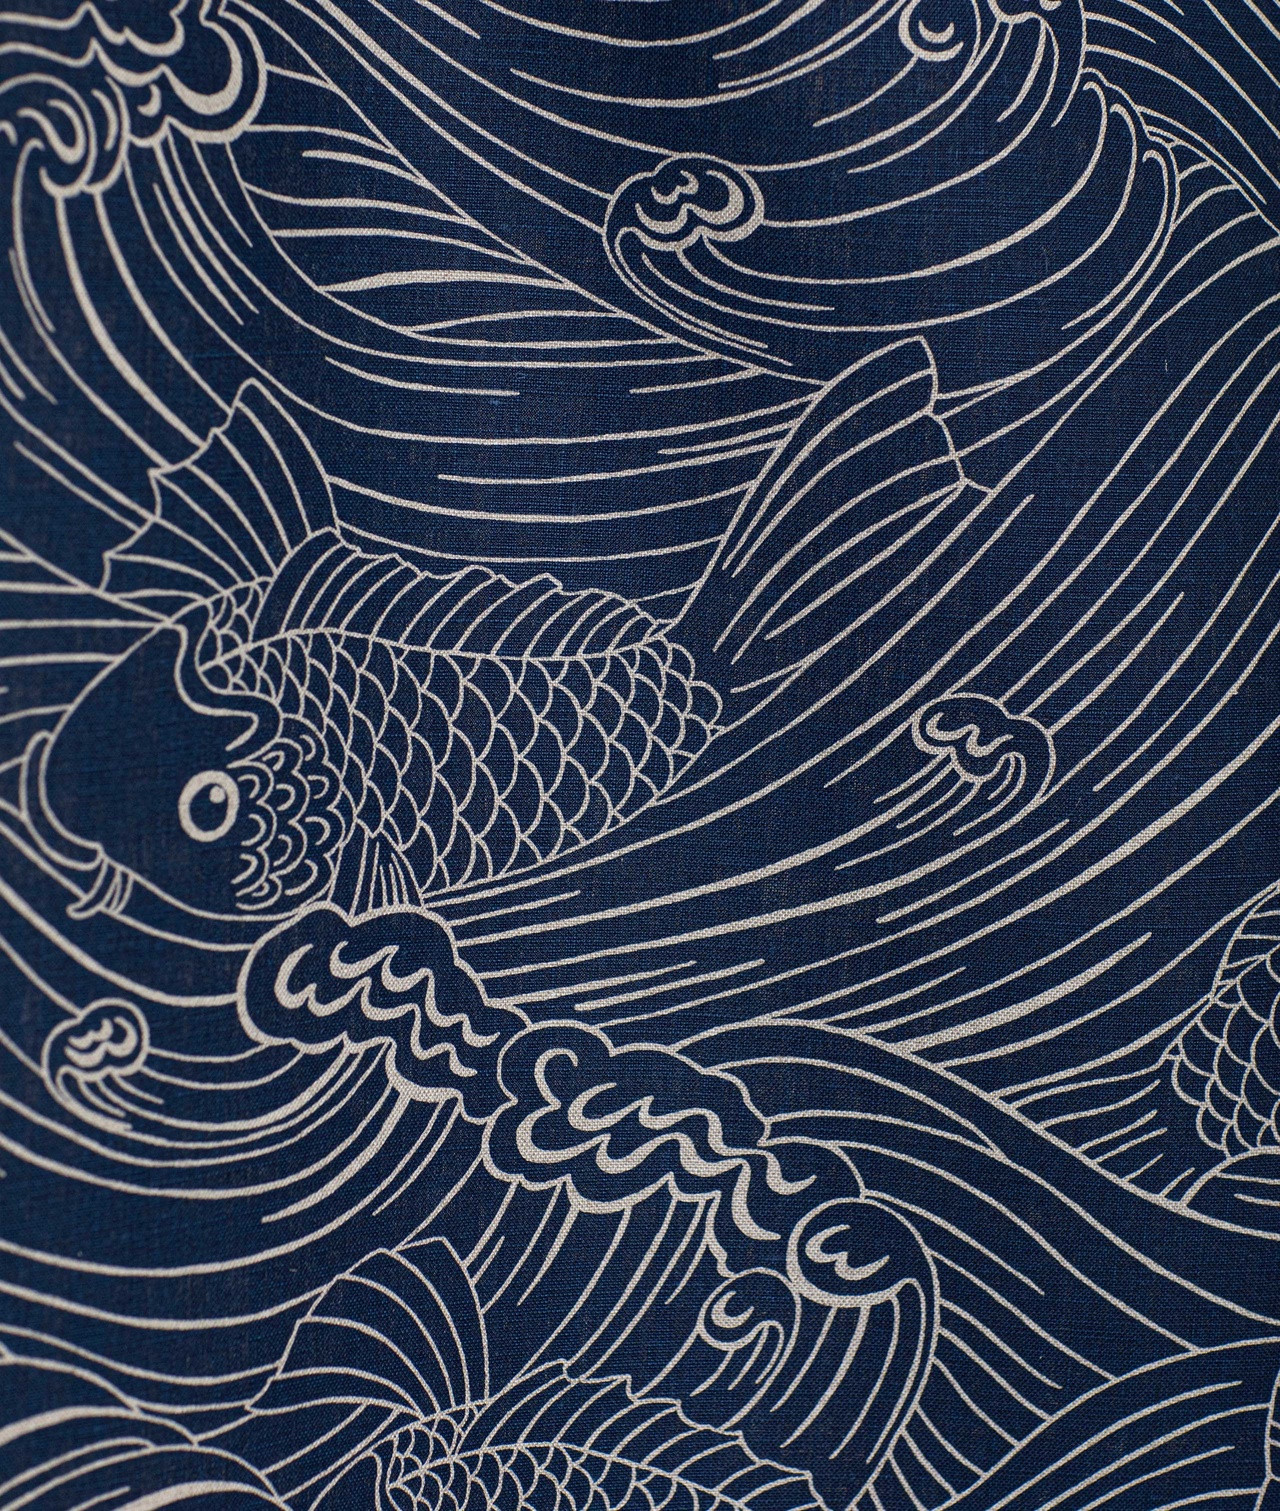 Linen fabric "Plenty more fish" Blue